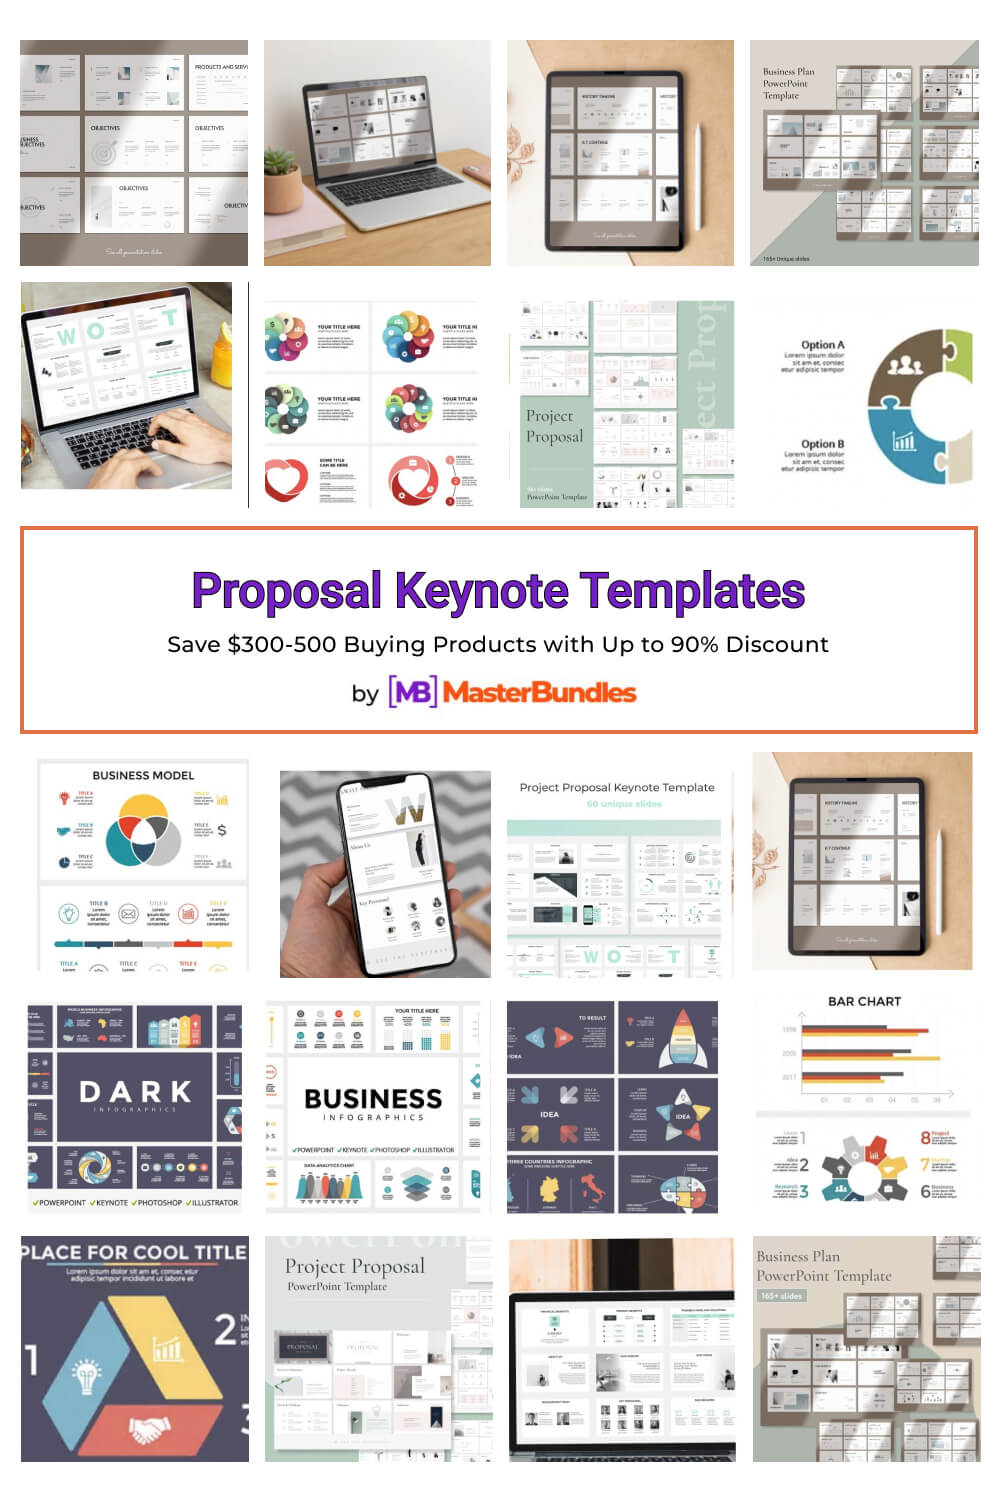 proposal keynote templates pinterest image.